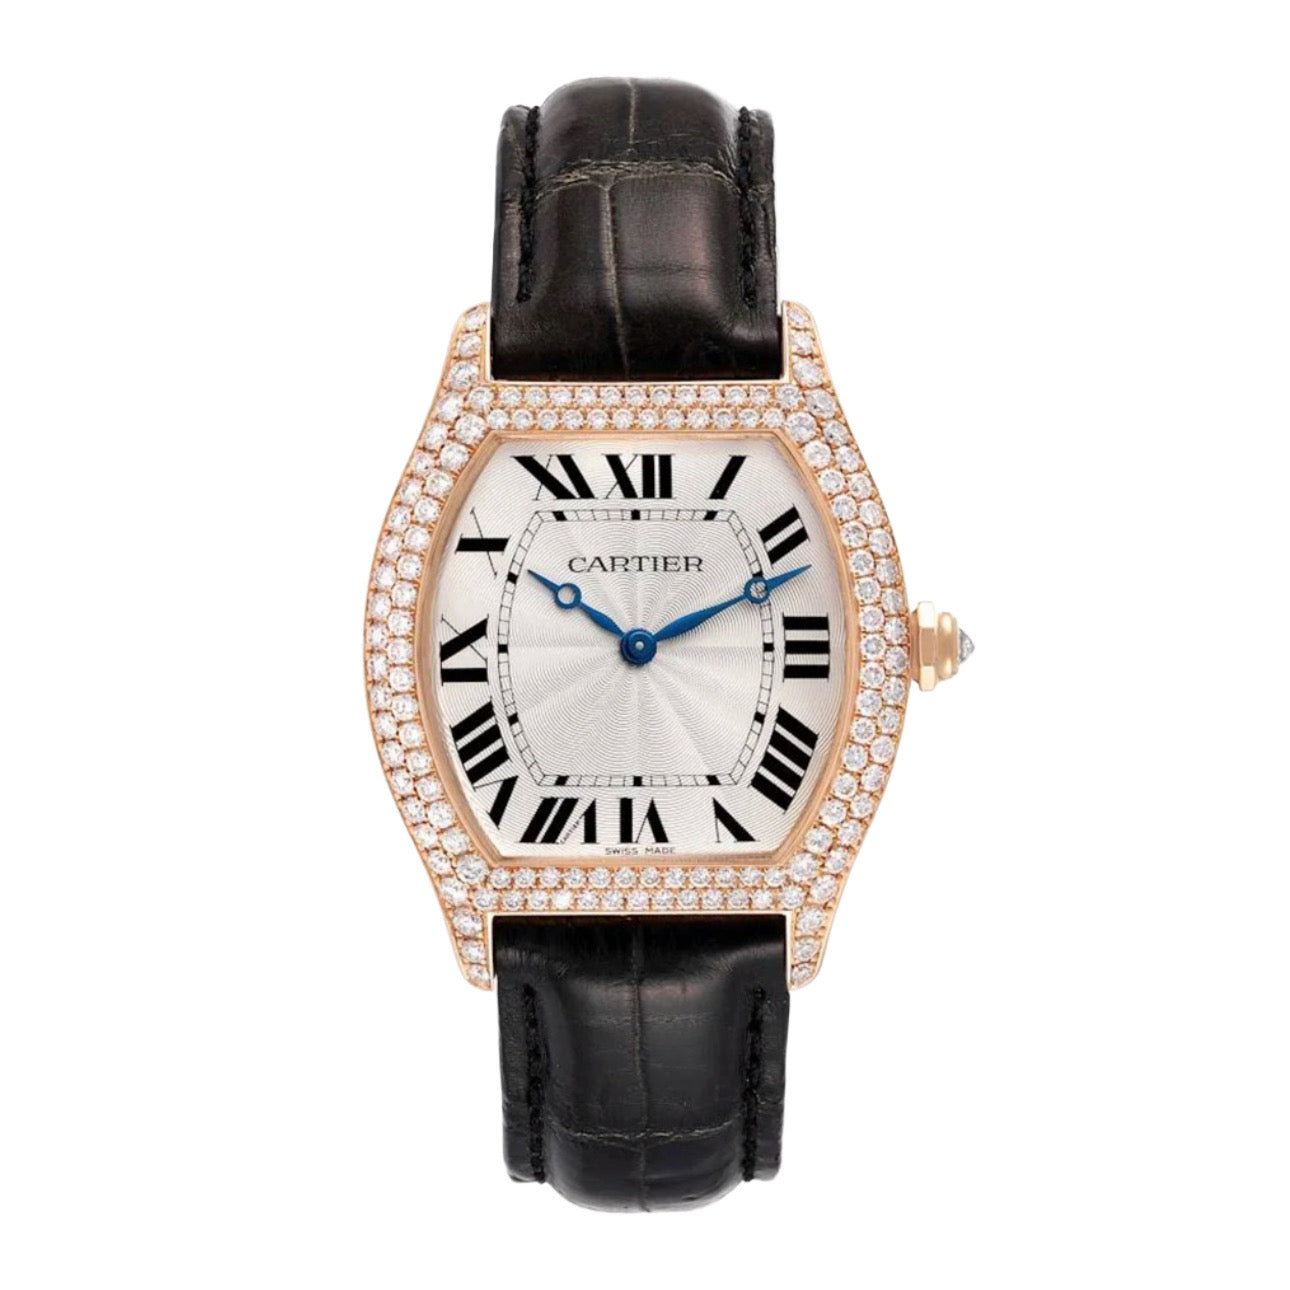 Invicta Shaq Men's 60mm Bolt Swiss Quartz Chronograph 1.40ctw Diamond  Bracelet Watch on sale at shophq.com - 680-657 | Chronograph, Watch sale,  Bracelet watch